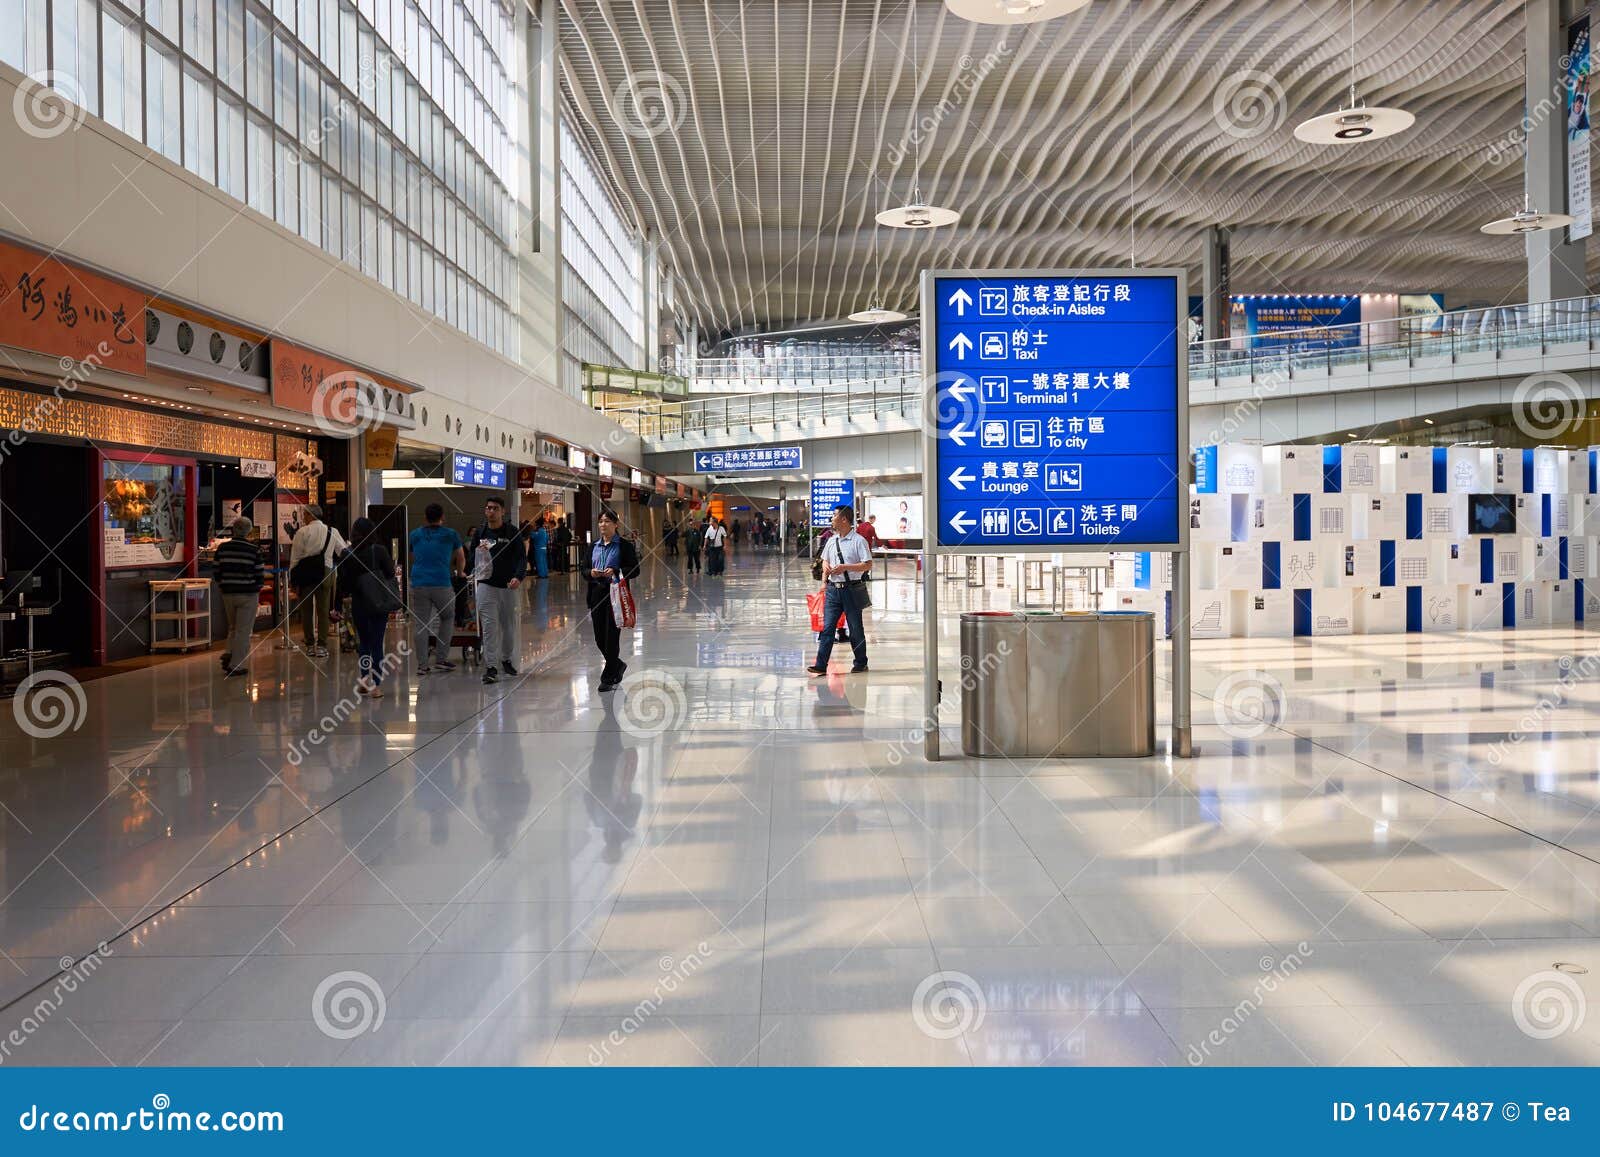 Hong Kong International Airport Photographie Ã©ditorial - Image du asie